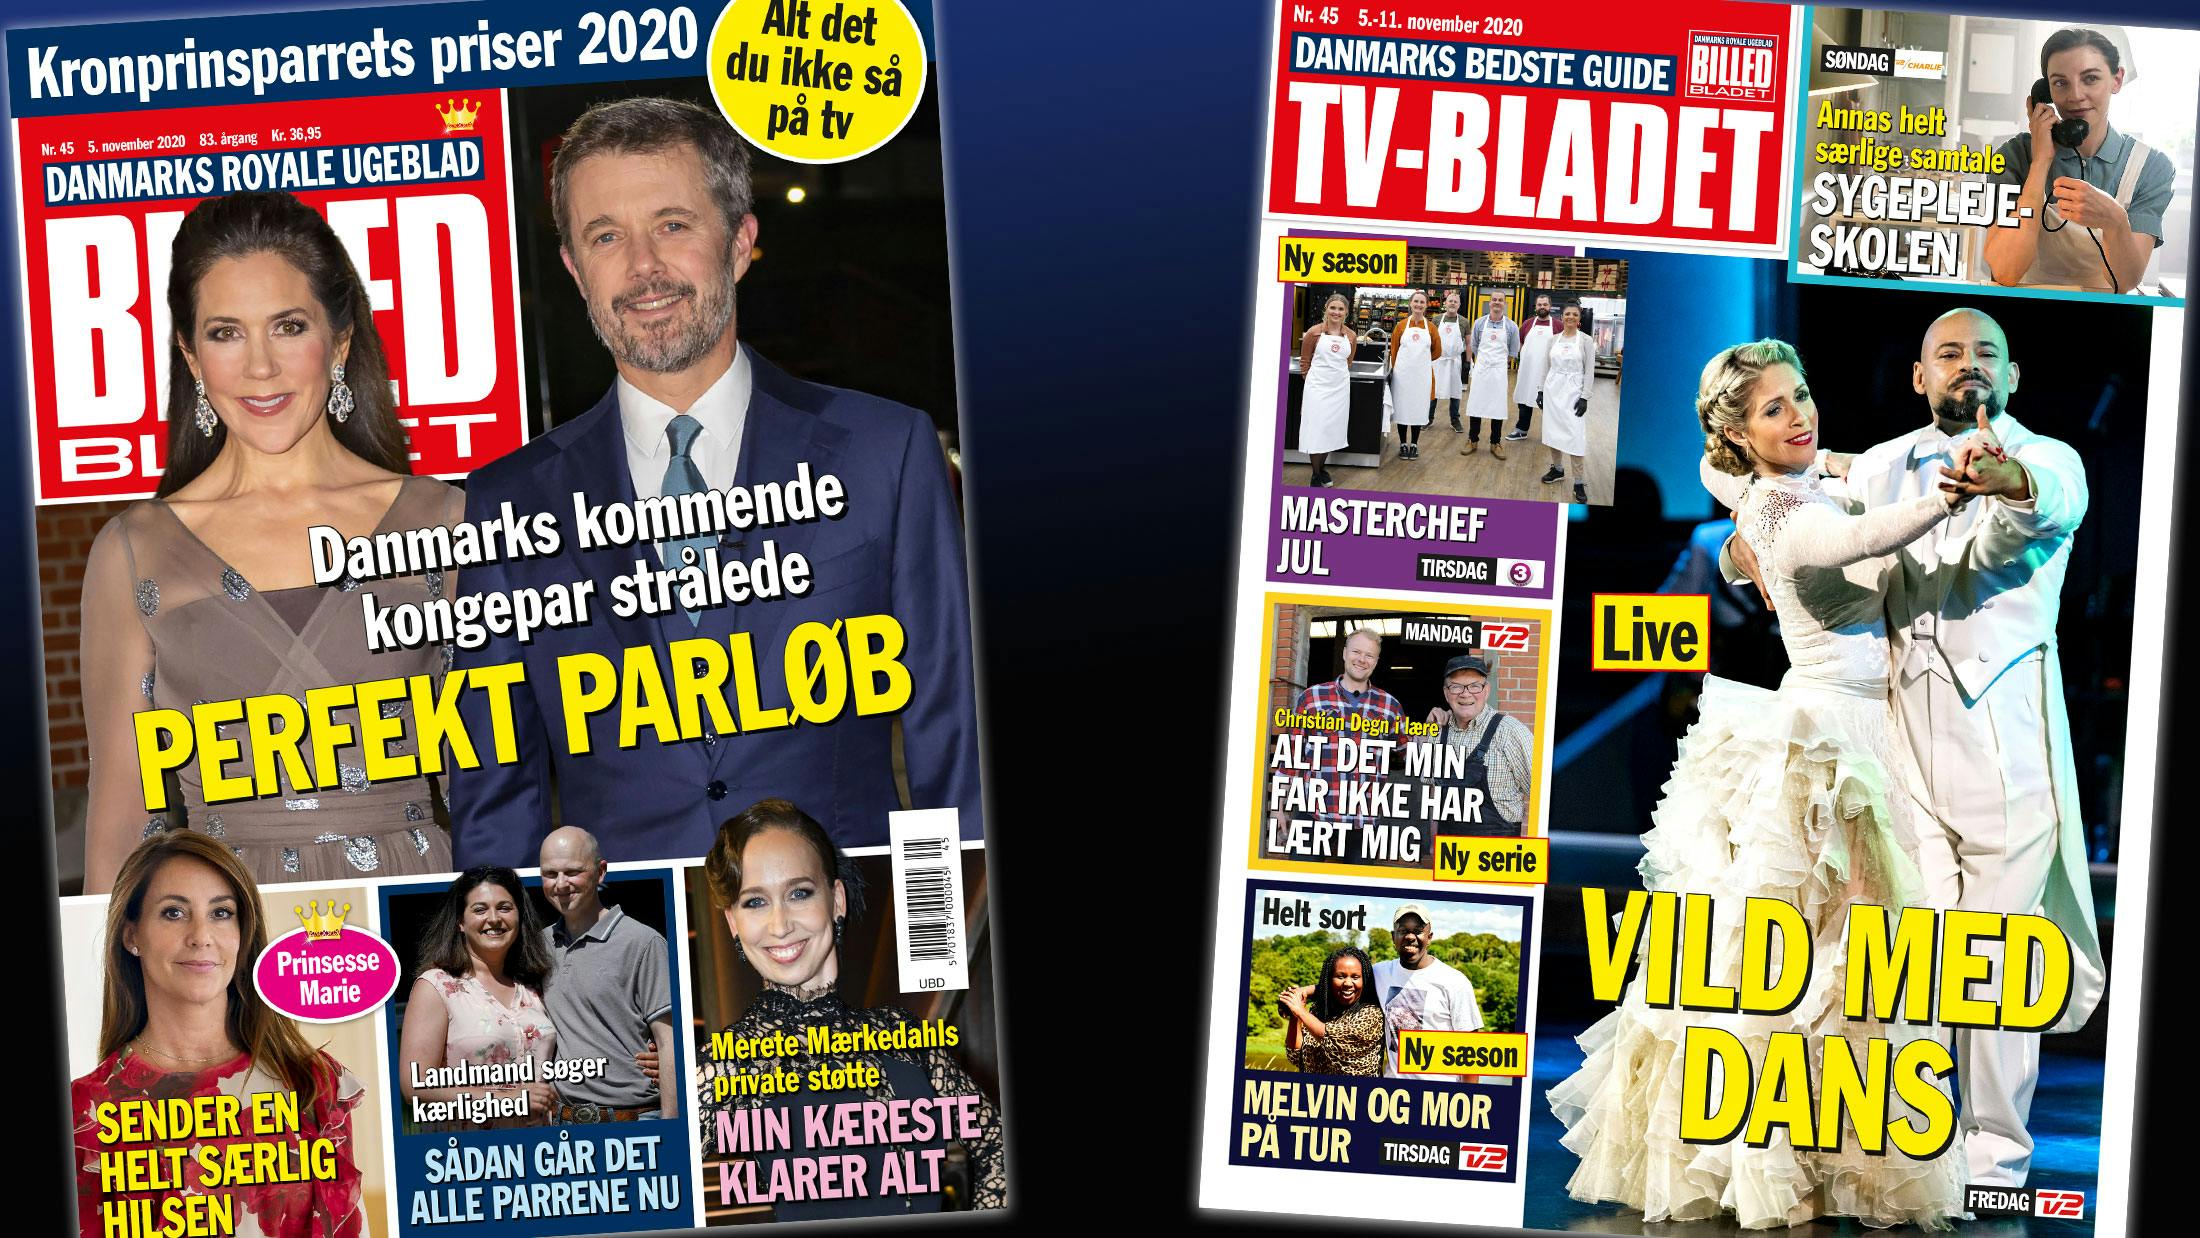 https://imgix.billedbladet.dk/media/article/webgrafik_bb45-forsider.jpg